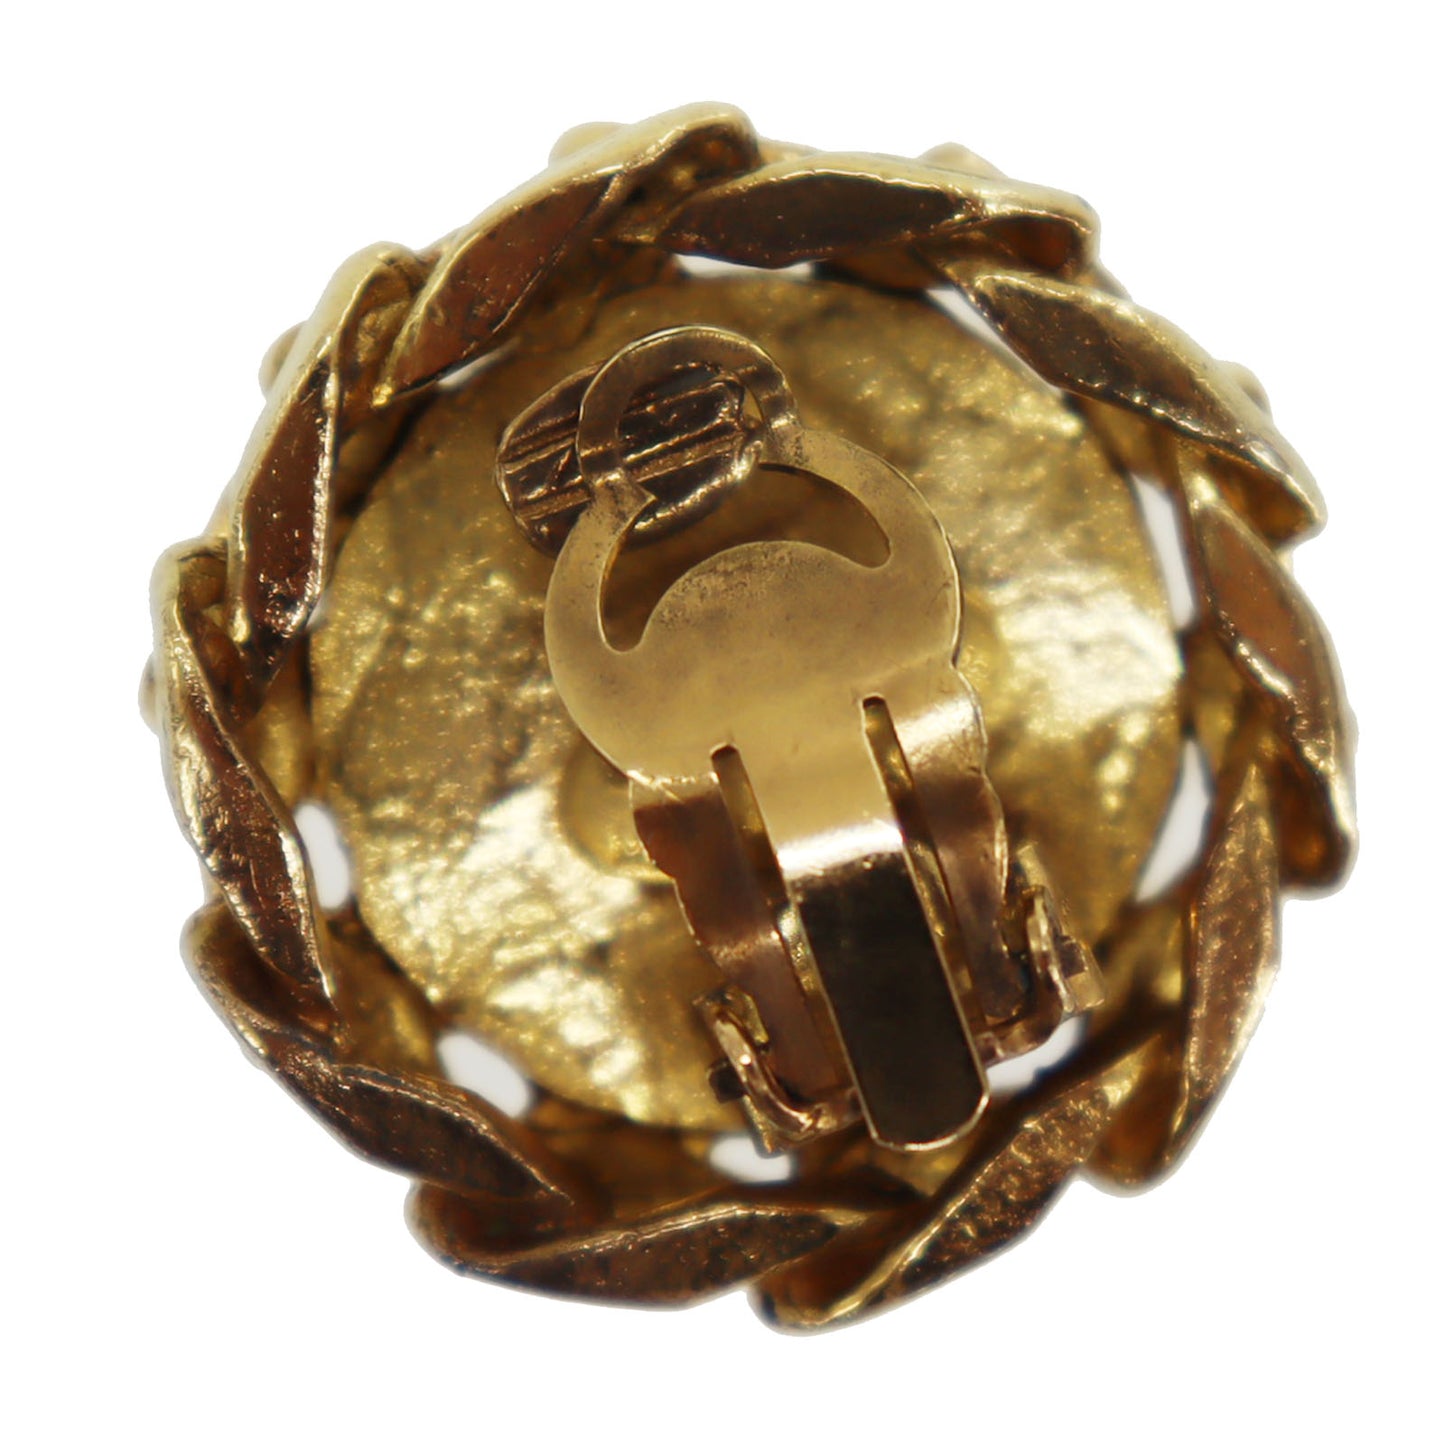 CHANEL CC Logos Earrings Gold Clip-On 2 3 #CH872